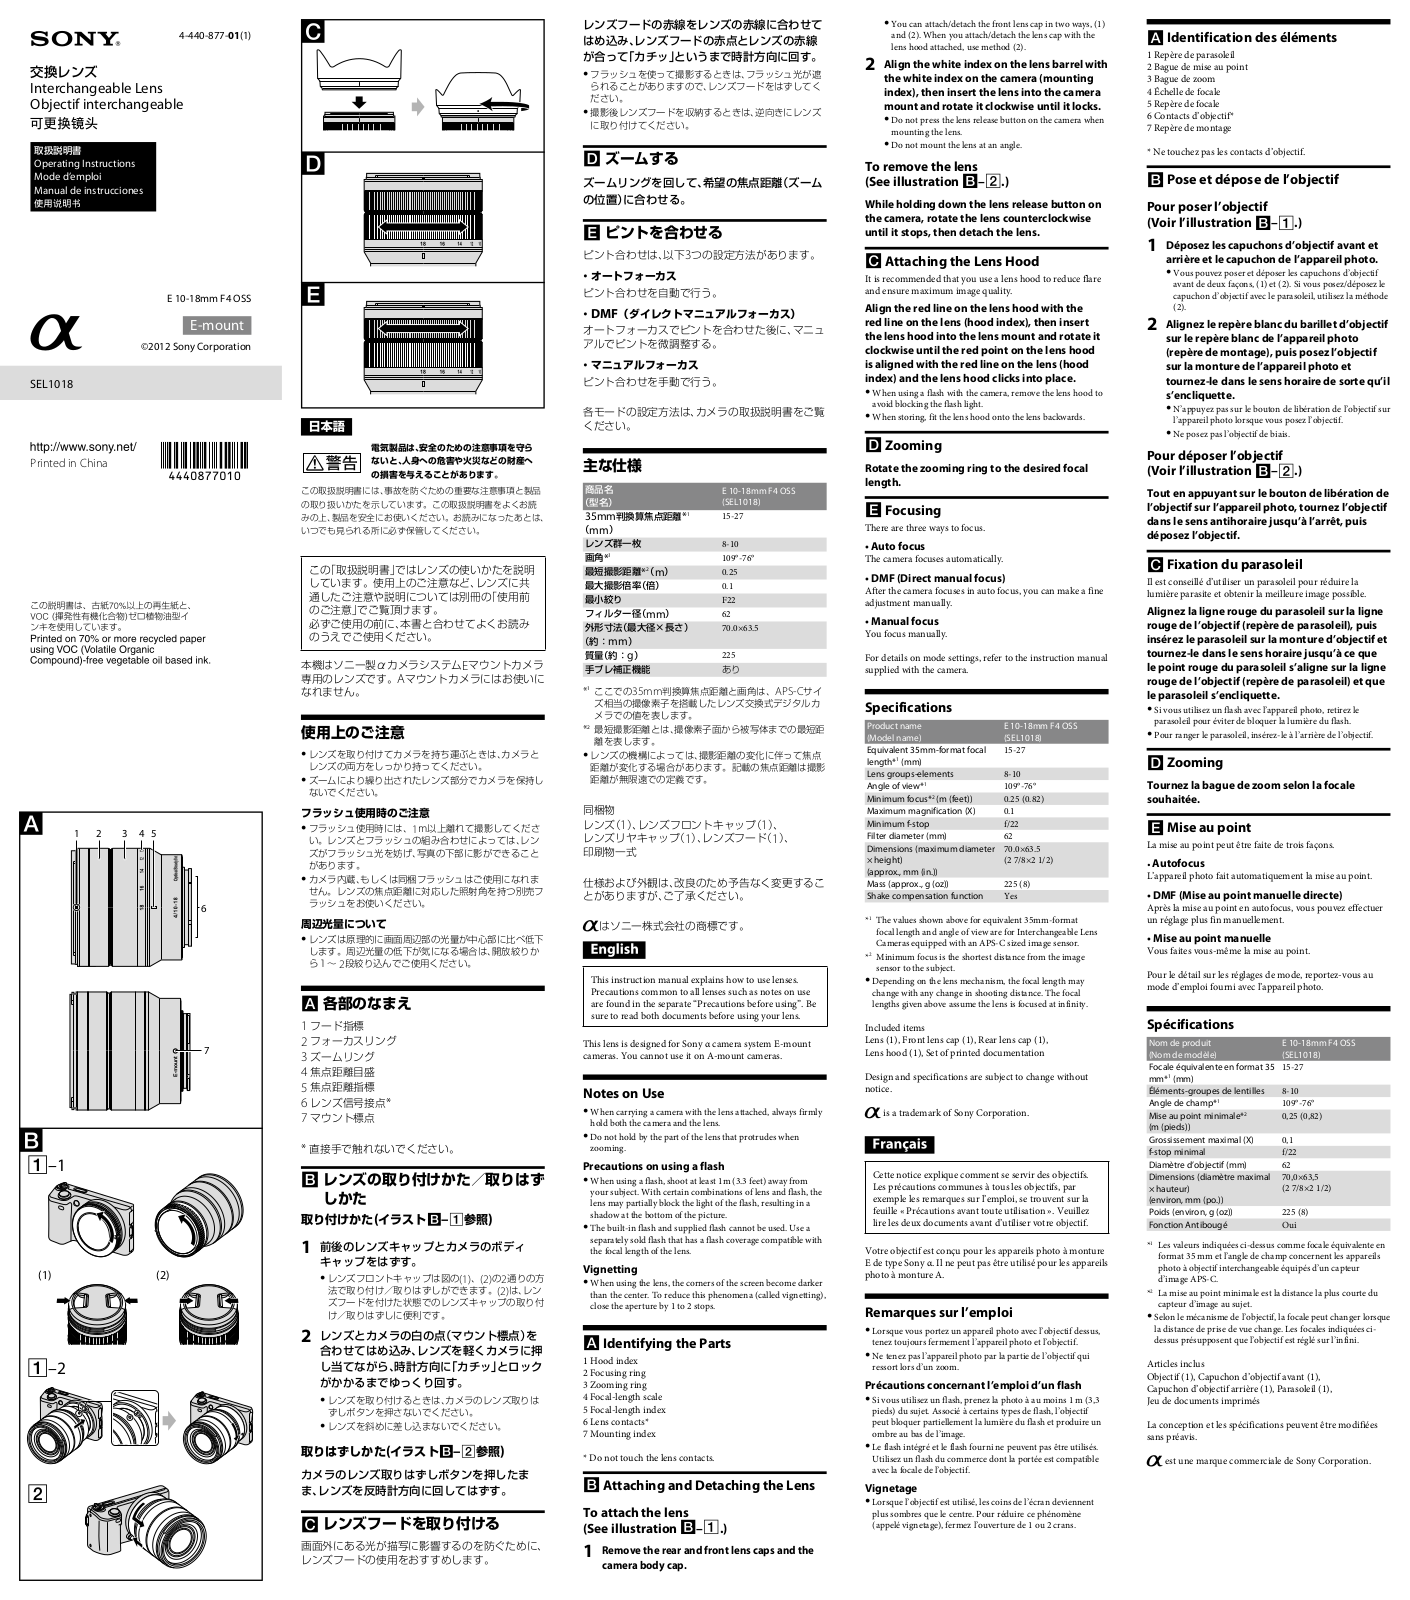 Sony SEL-1018 User Manual